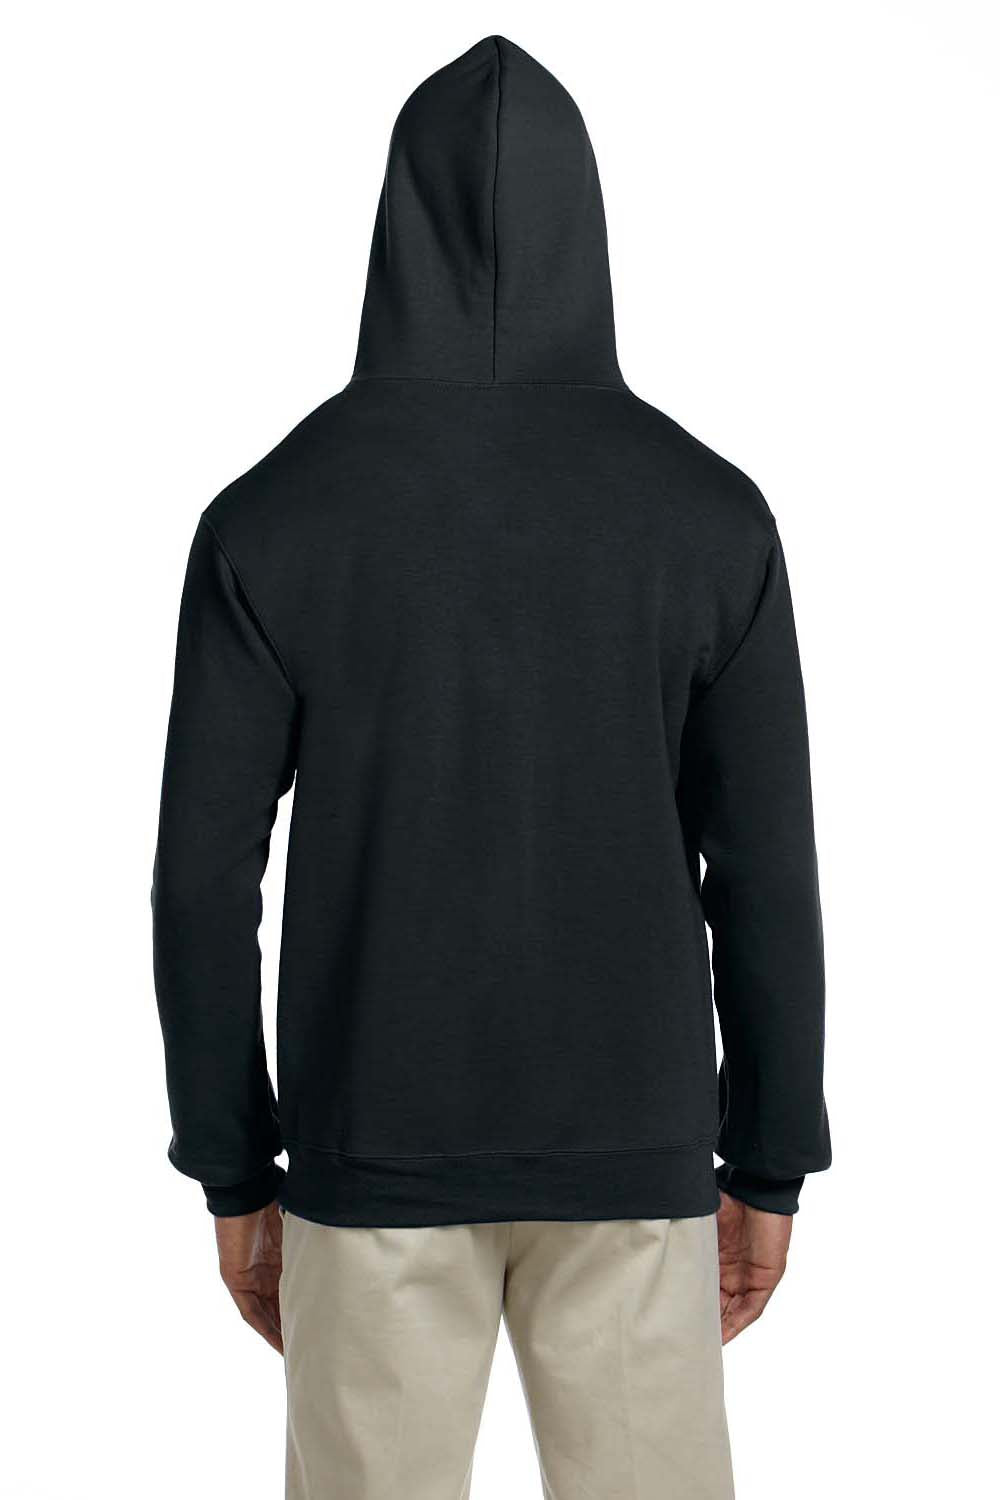 Jerzees 4999 Mens Super Sweats NuBlend Fleece Full Zip Hooded Sweatshirt Hoodie Black Back